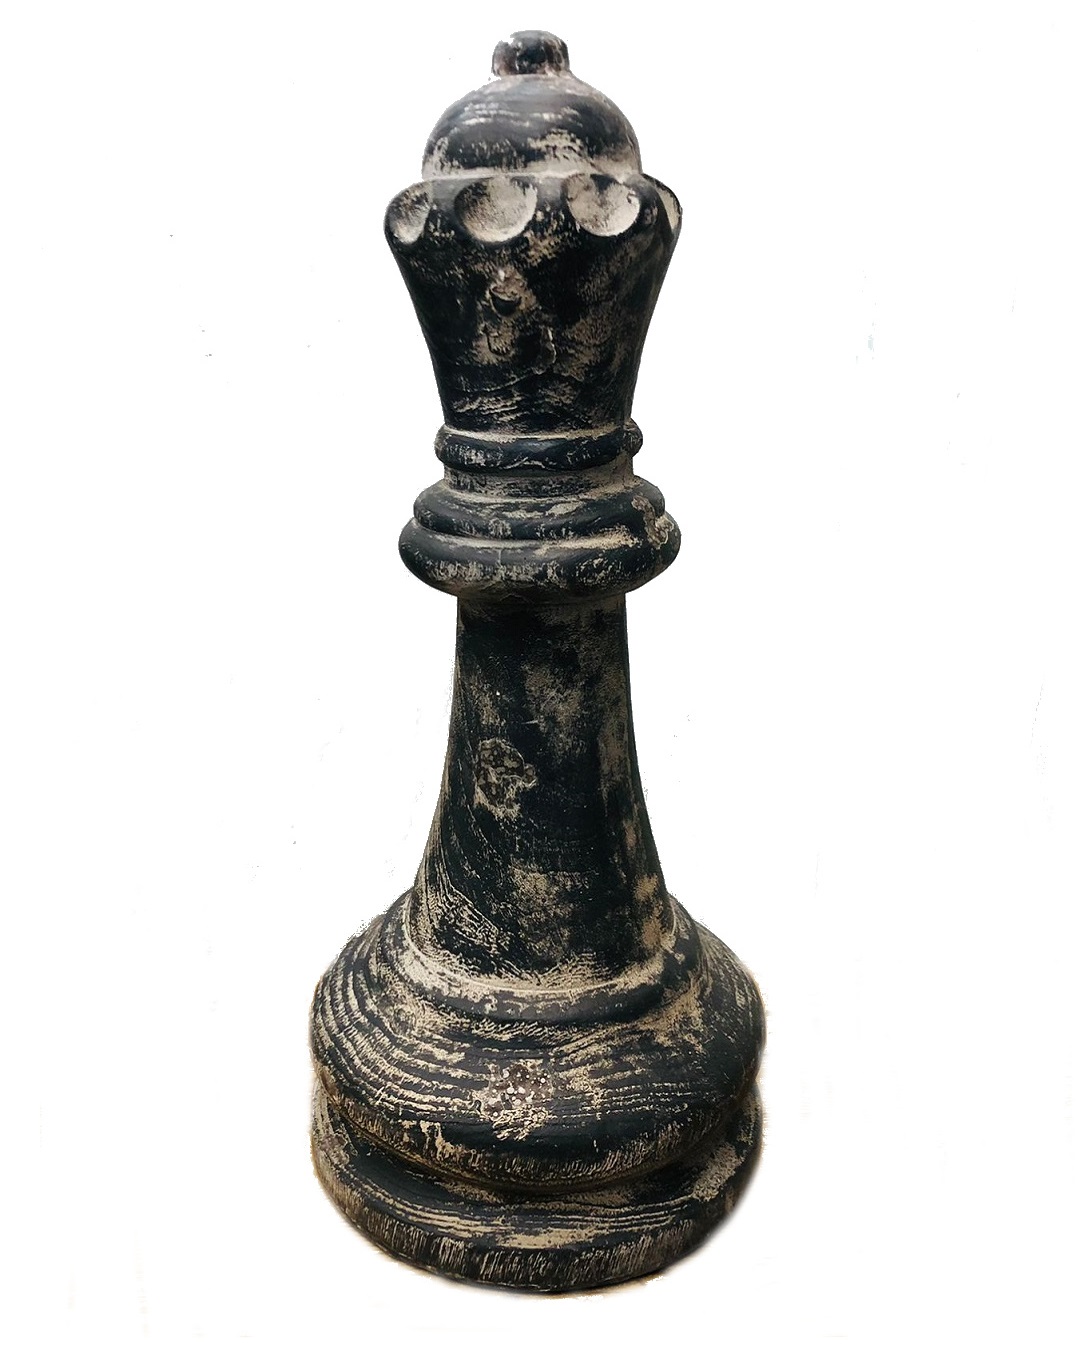 Magnesium queen chess piece